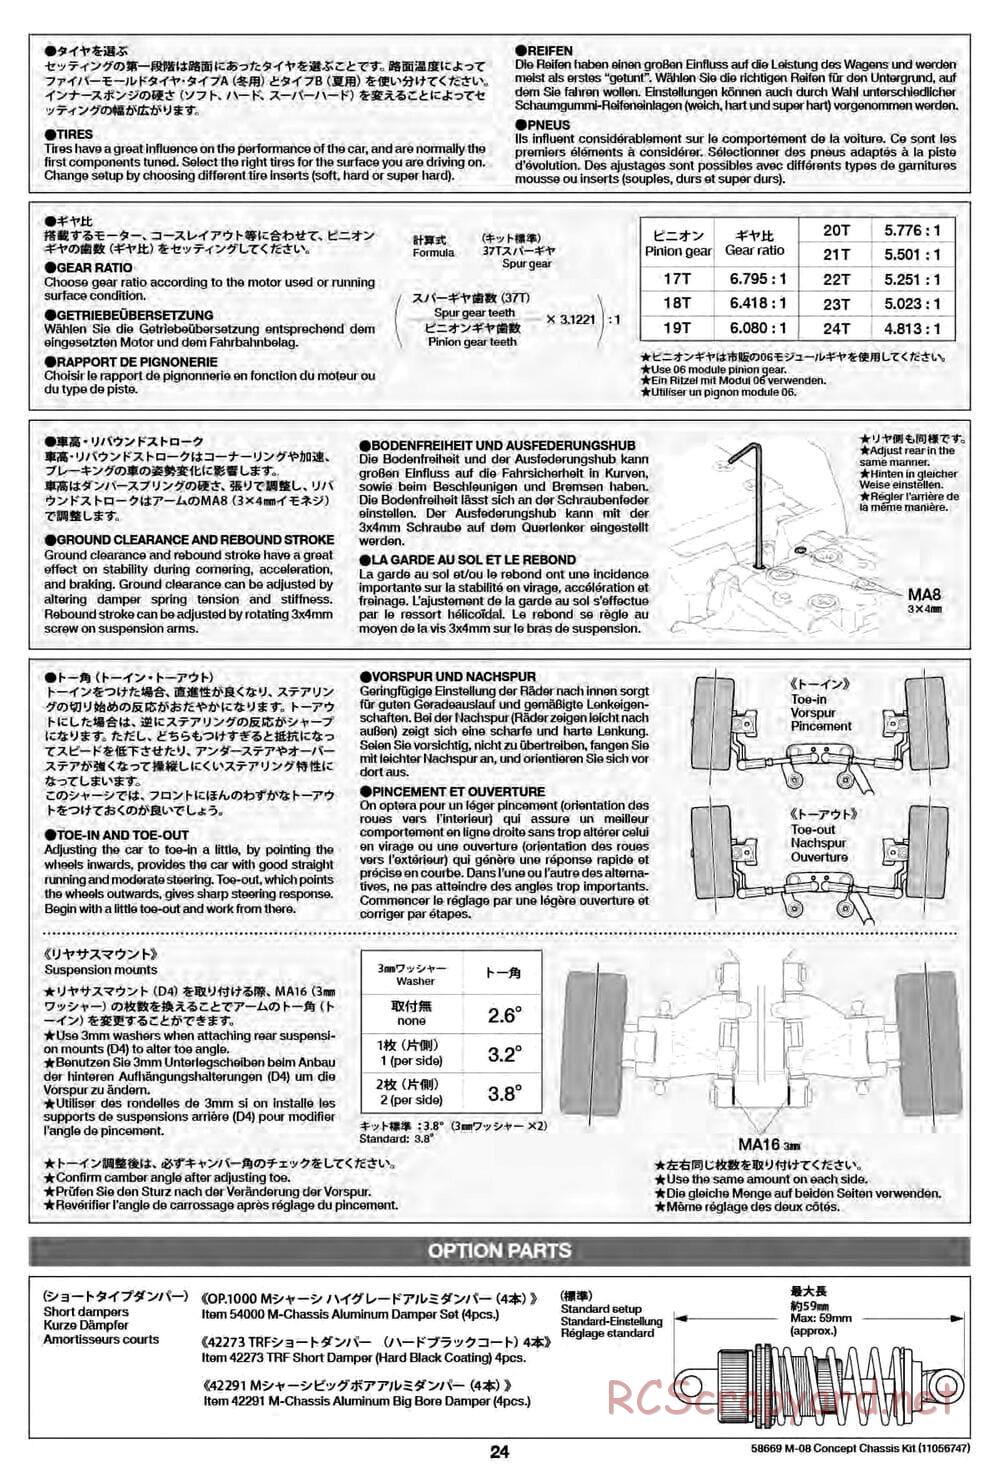 Tamiya - M-08 Concept Chassis - Manual - Page 24